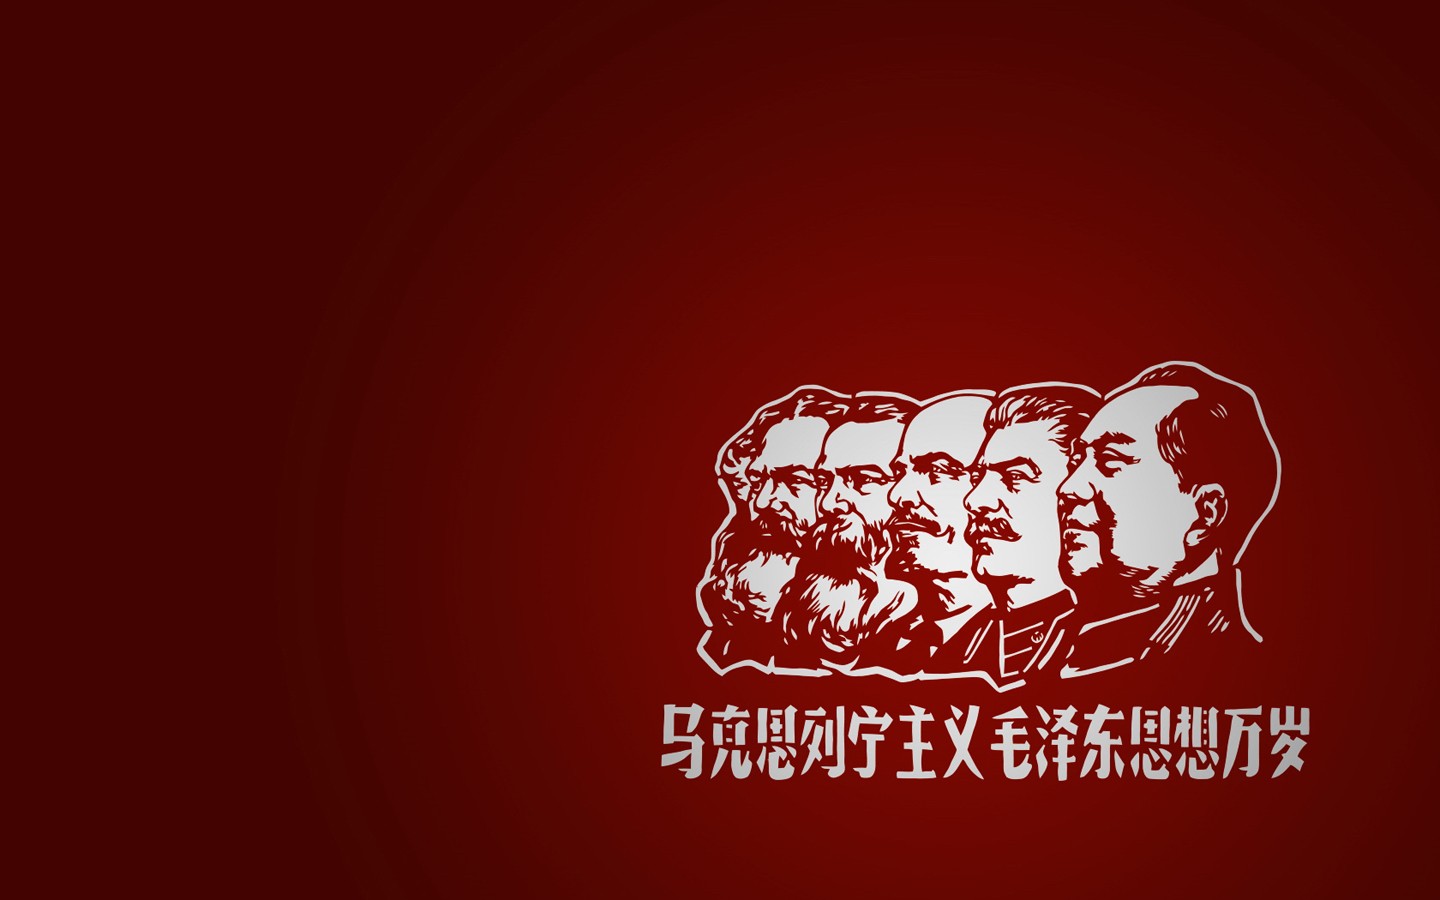 General 1440x900 men simple background beard red background Political Figure communism